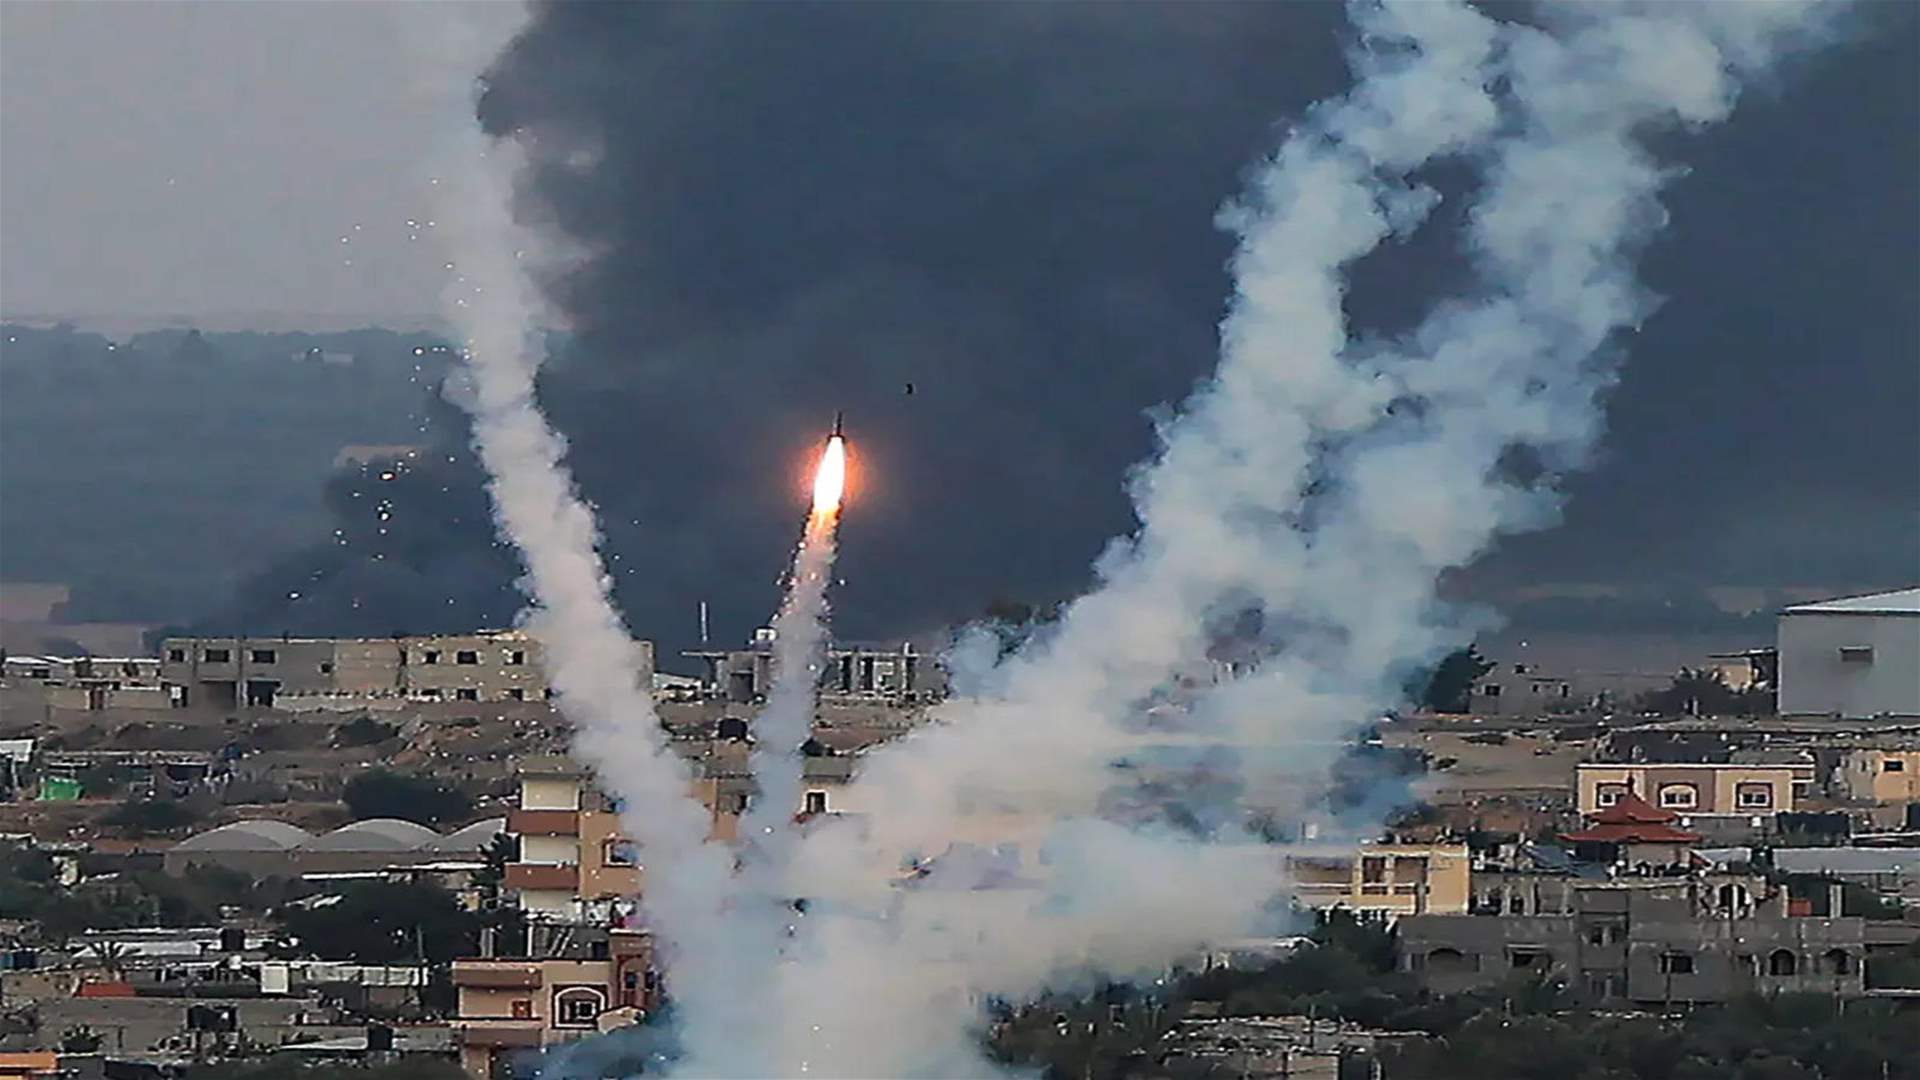 Rockets fired from south Lebanon towards Israeli sites in Galilee Panhandle: Al Jazeera